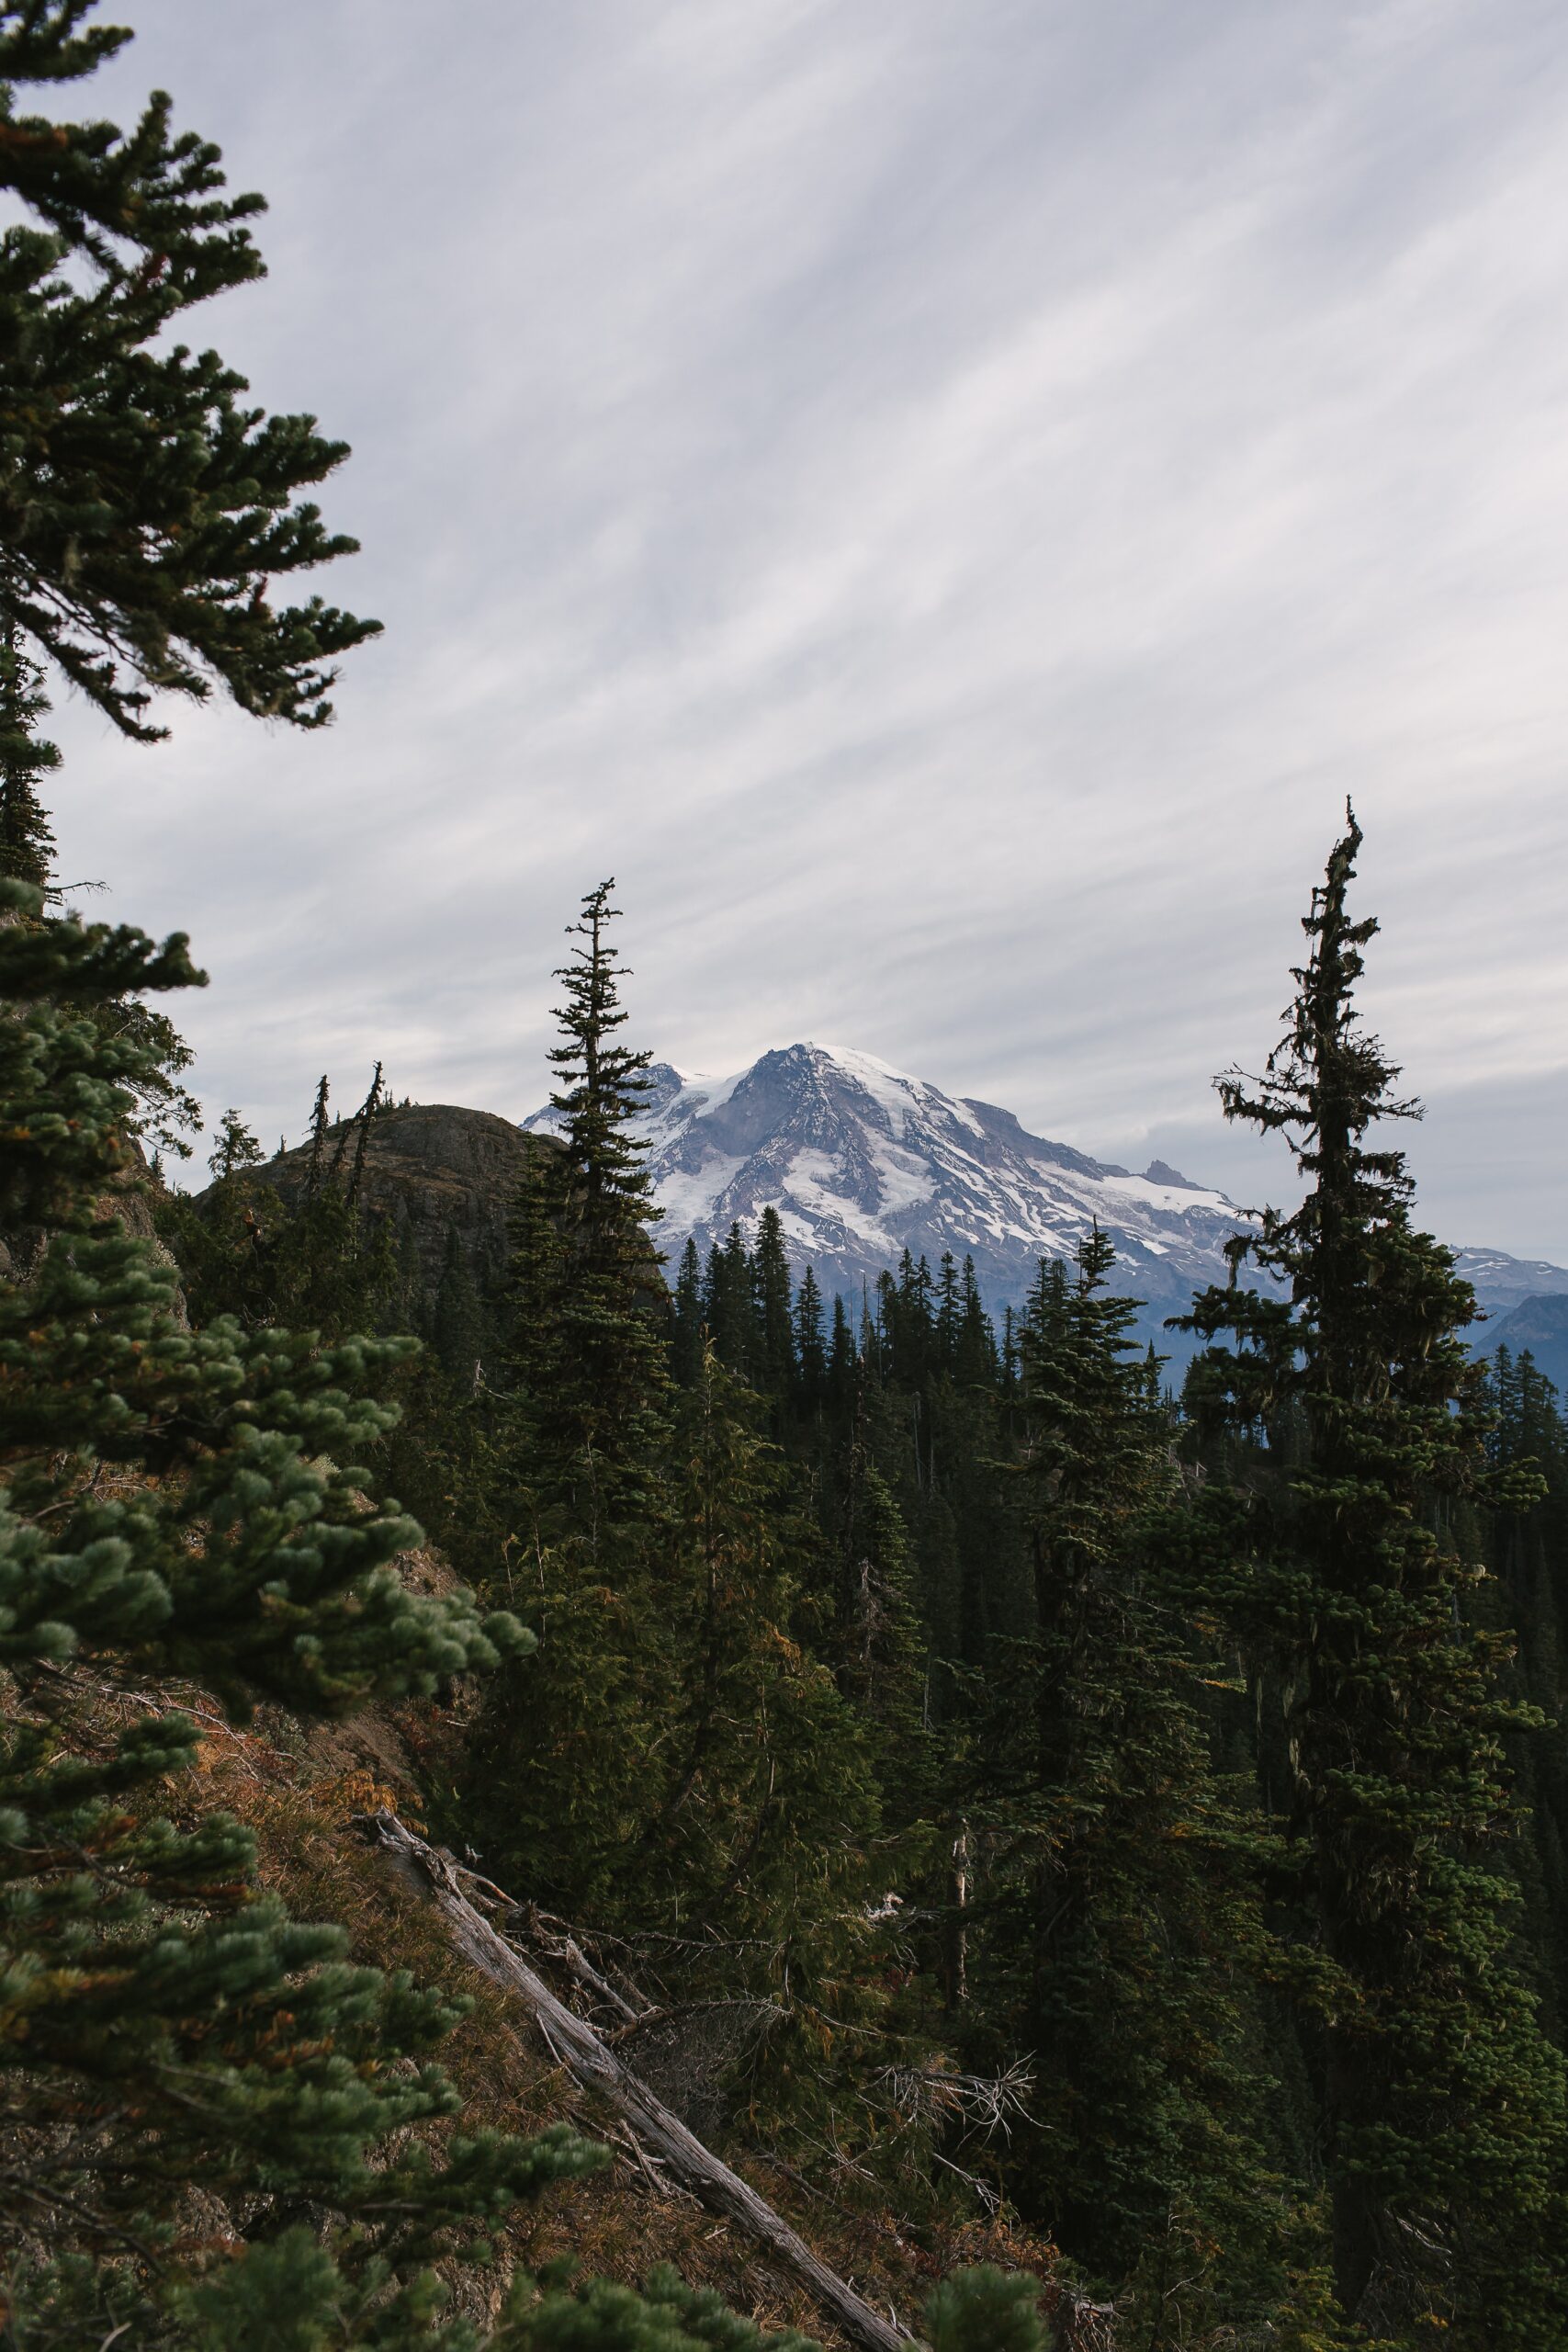 Mount Rainier seen over trees